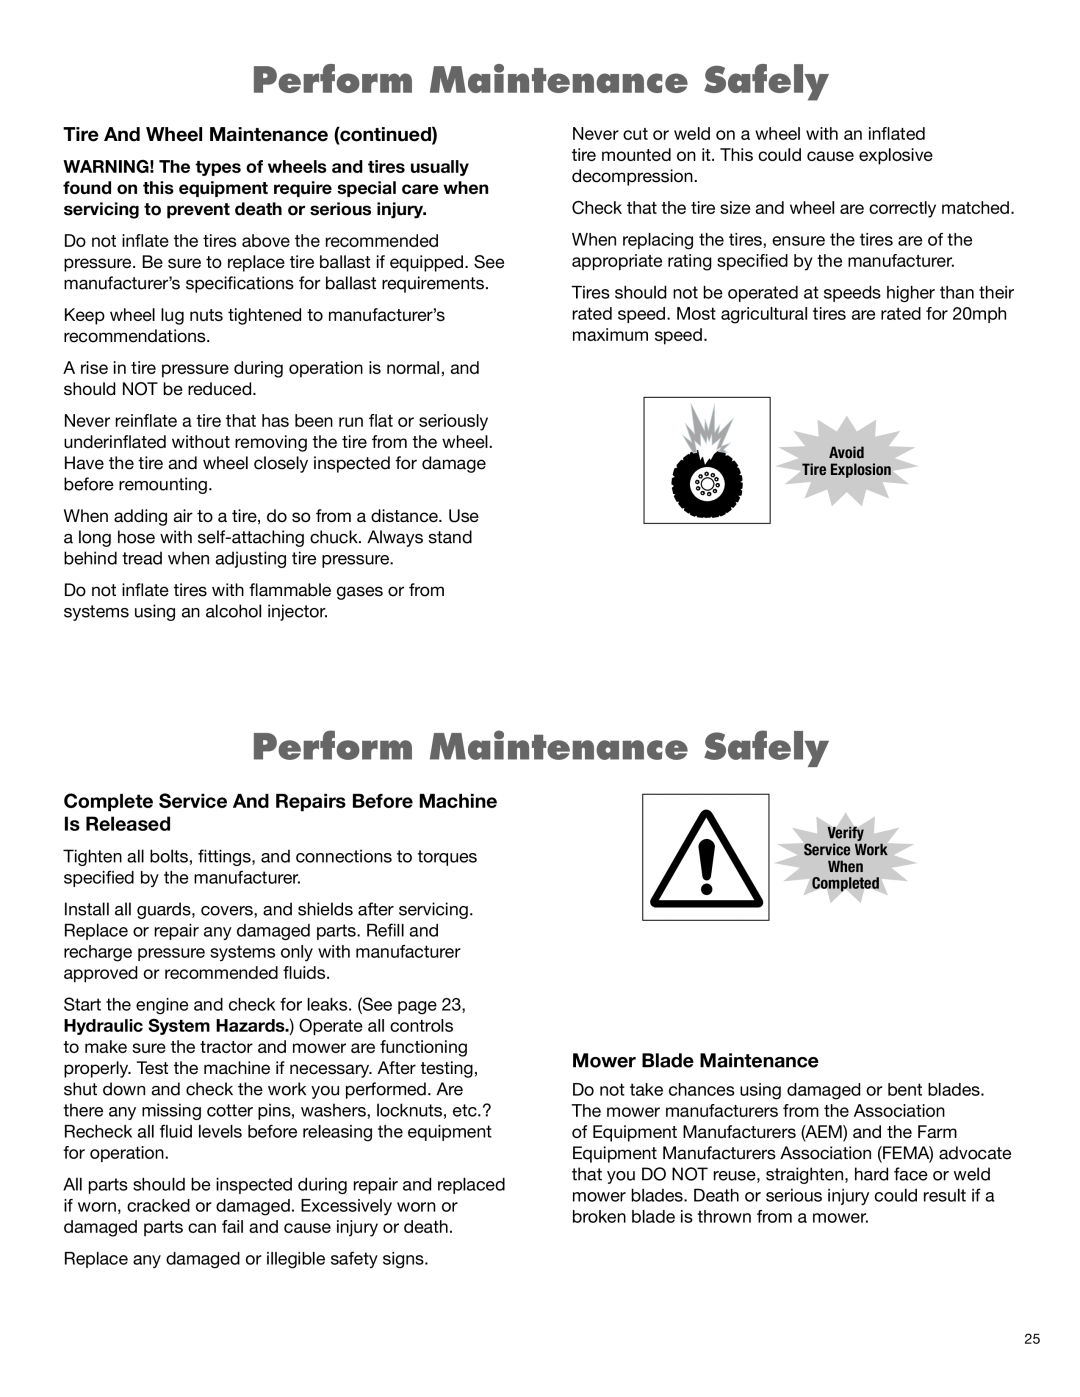 Alamo 1900 manual Perform Maintenance Safely, Tire And Wheel Maintenance continued, Mower Blade Maintenance 